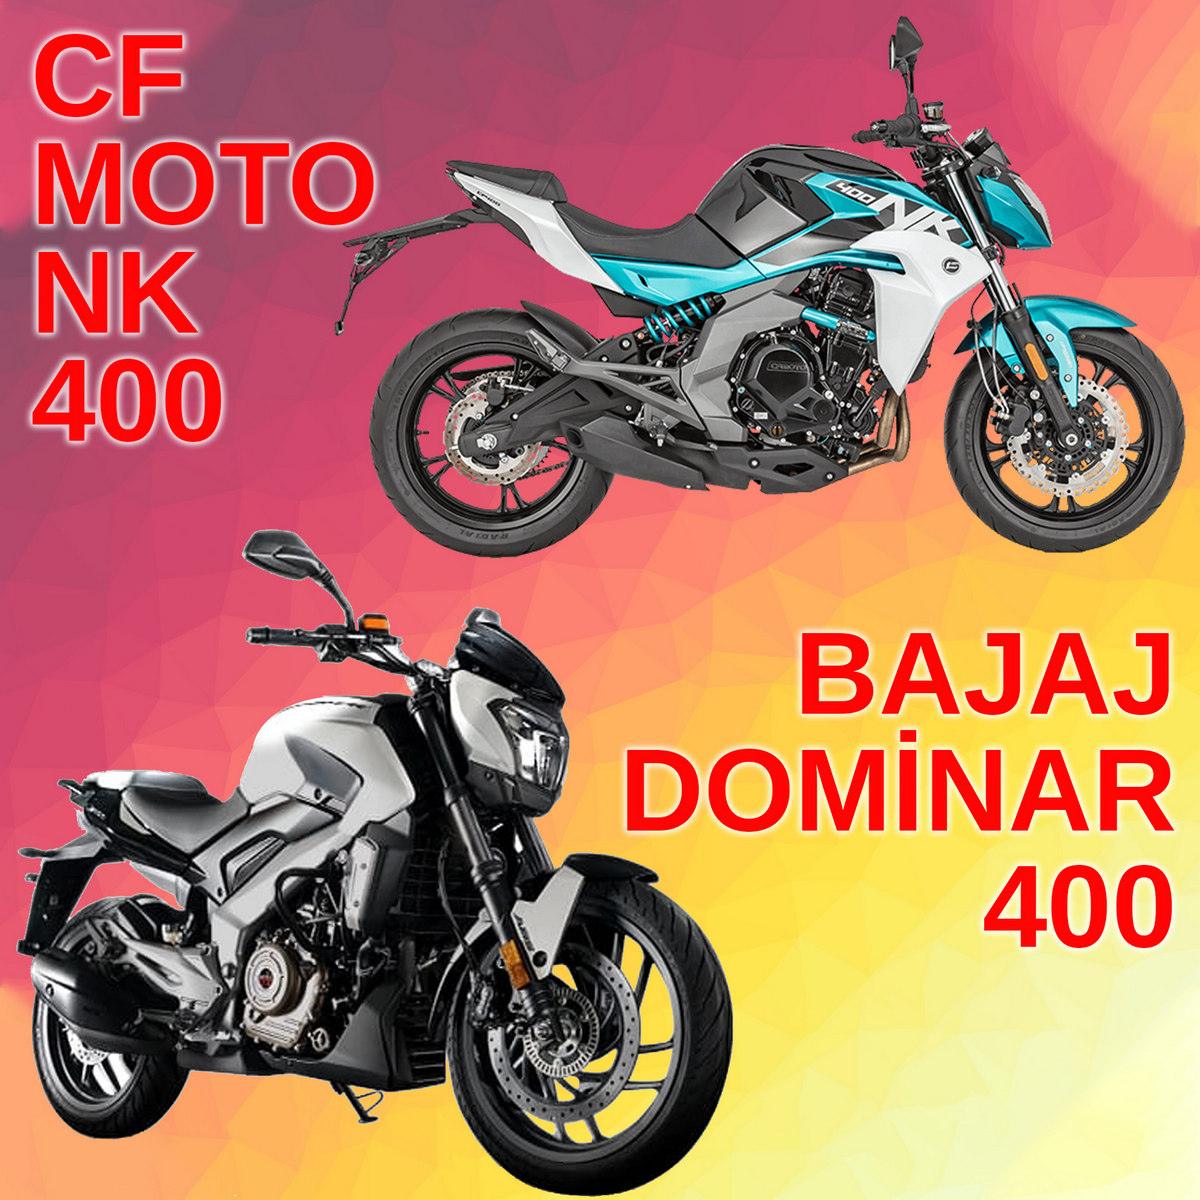 Bajaj DOMİNAR - CF Moto NK-400